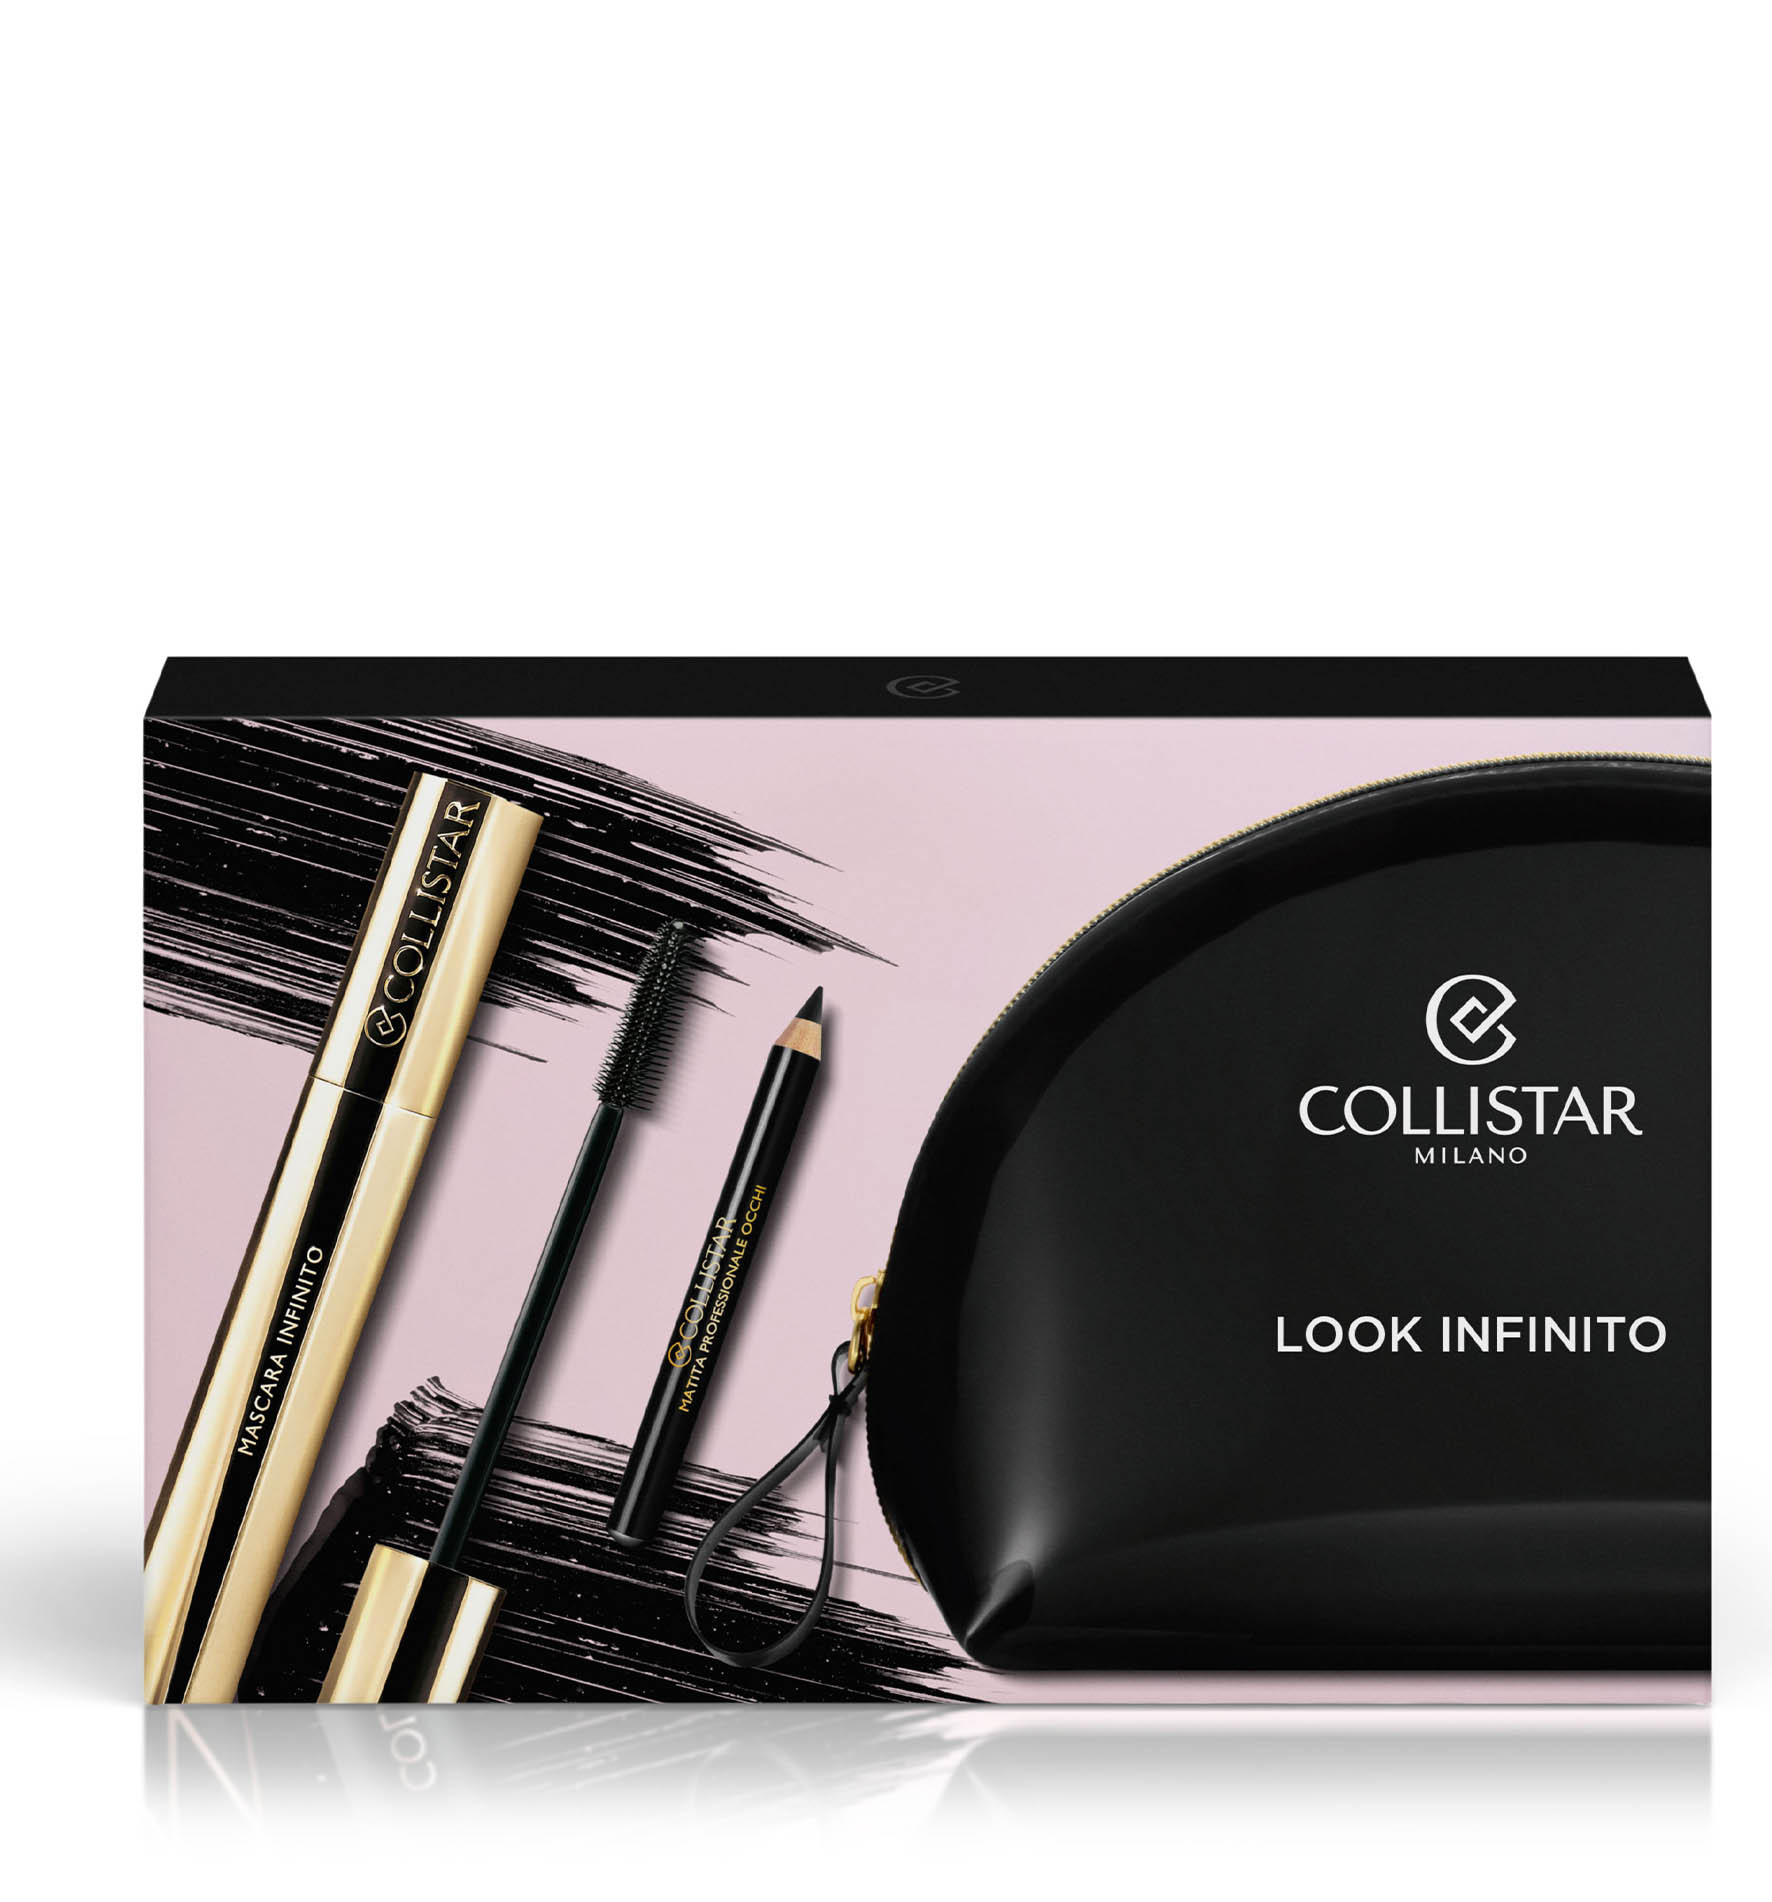 SET LOOK INFINITO - Mascara | Collistar - Shop Online Ufficiale